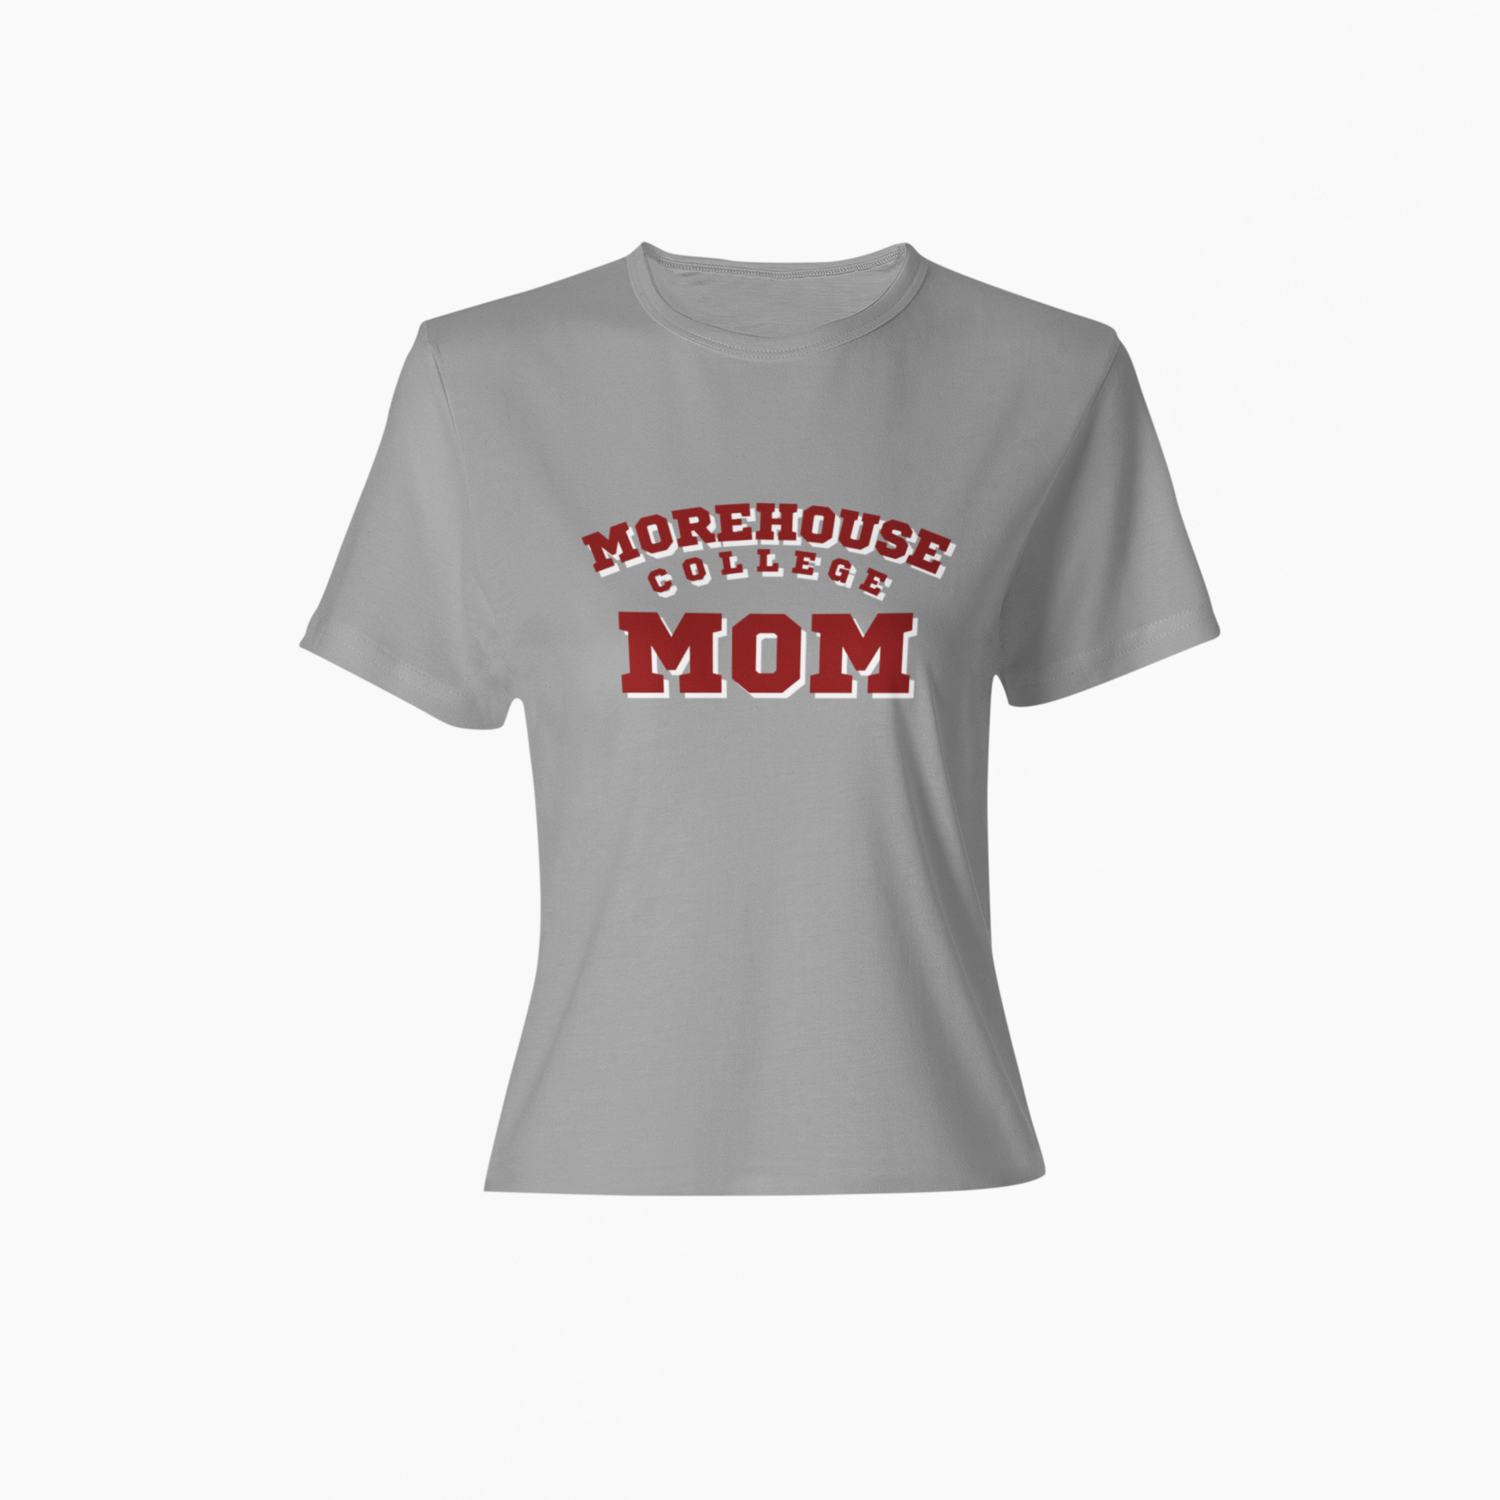 Morehouse Mom Short Sleeve Tee by Afflatus